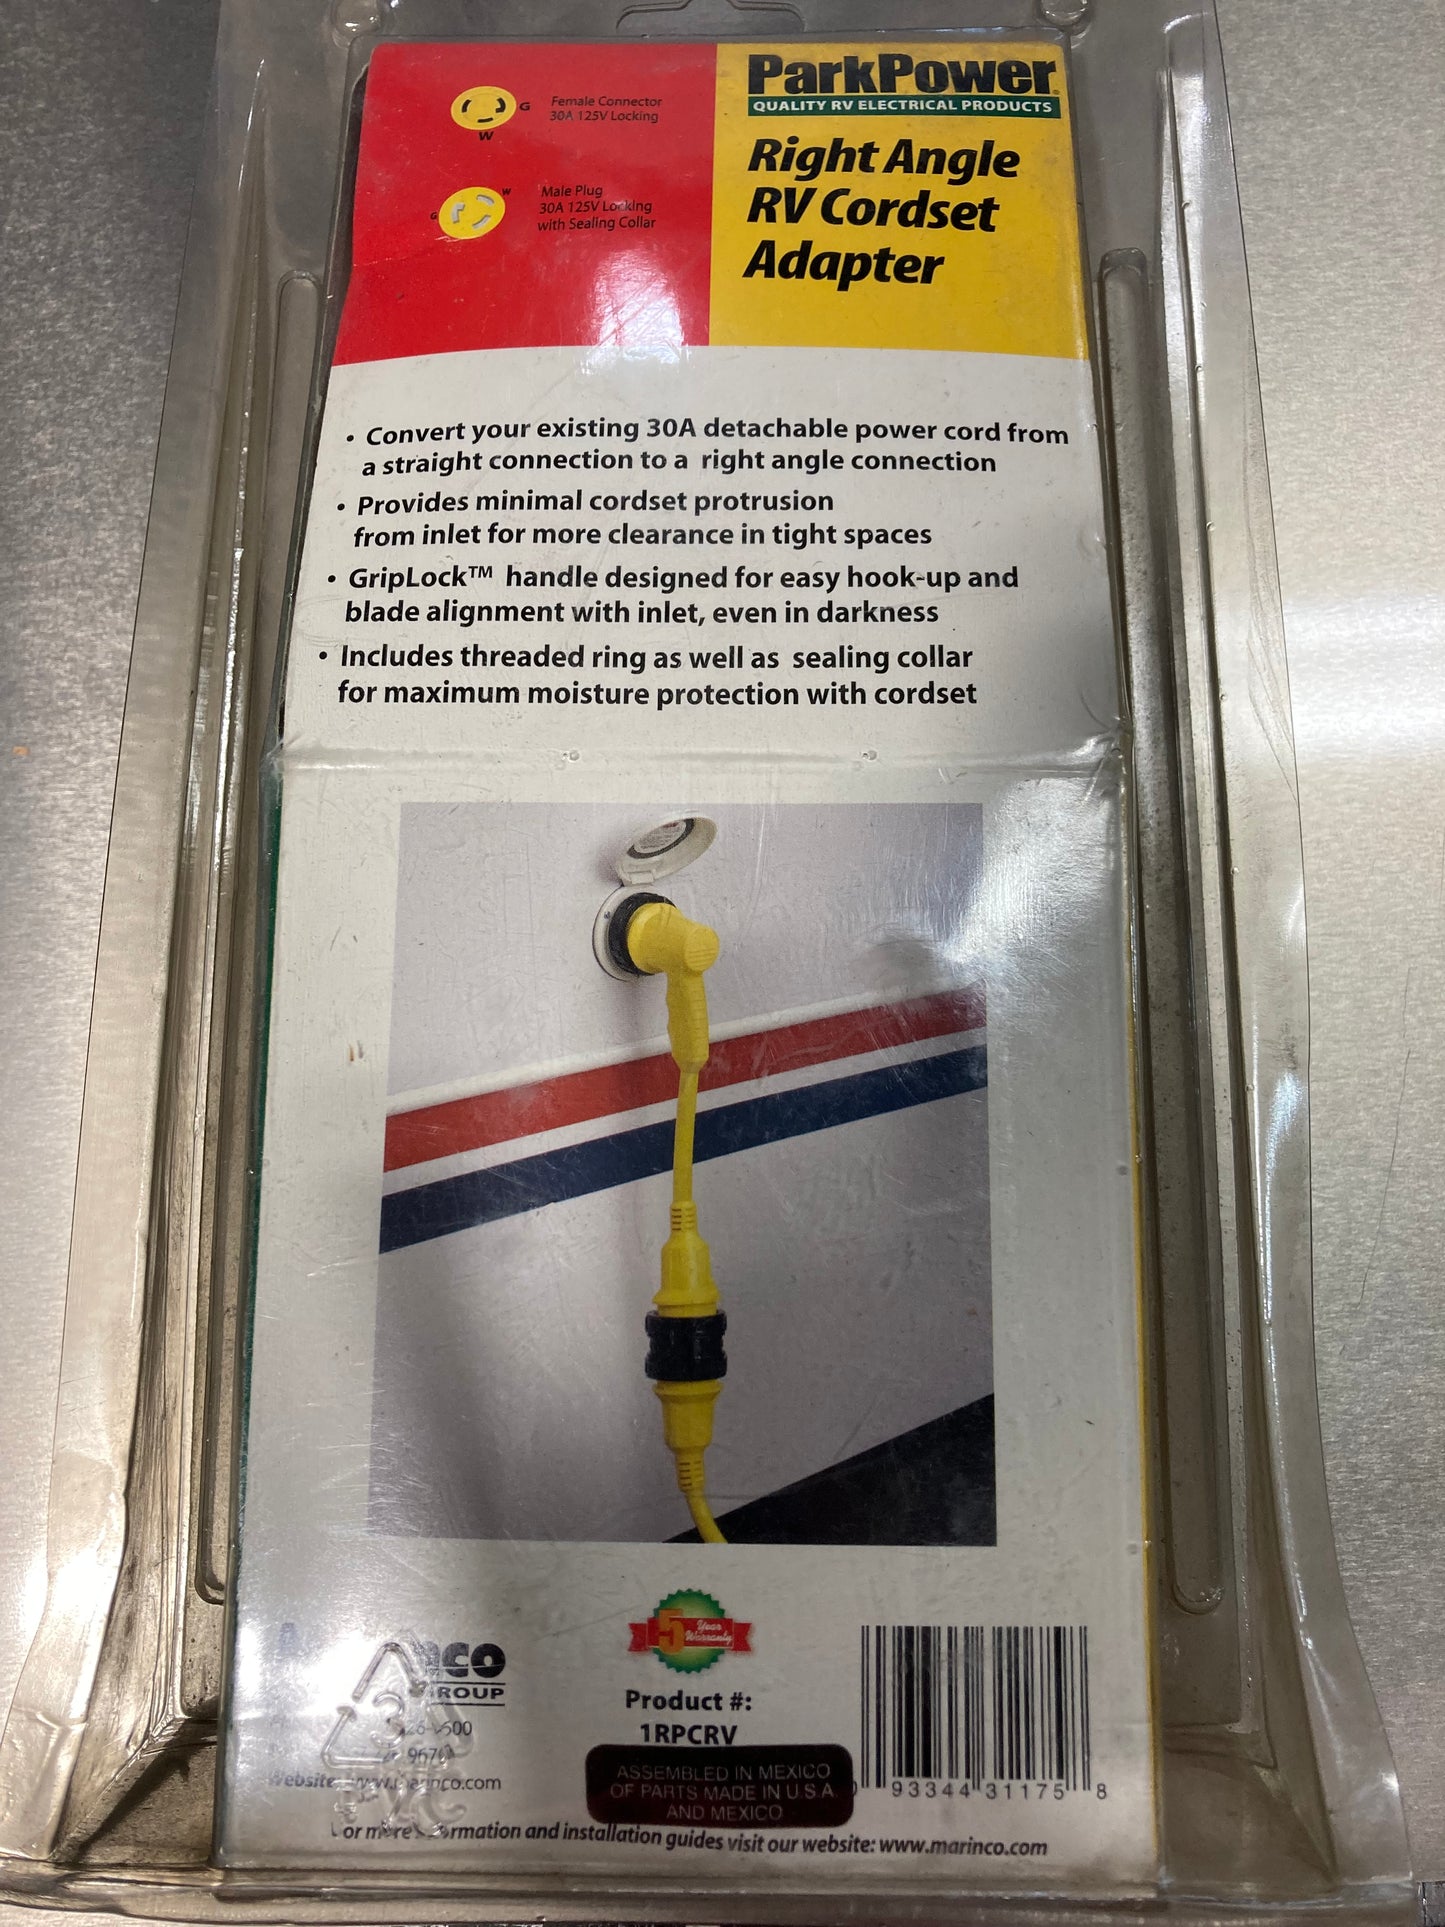 Right angle RV cord set adapter